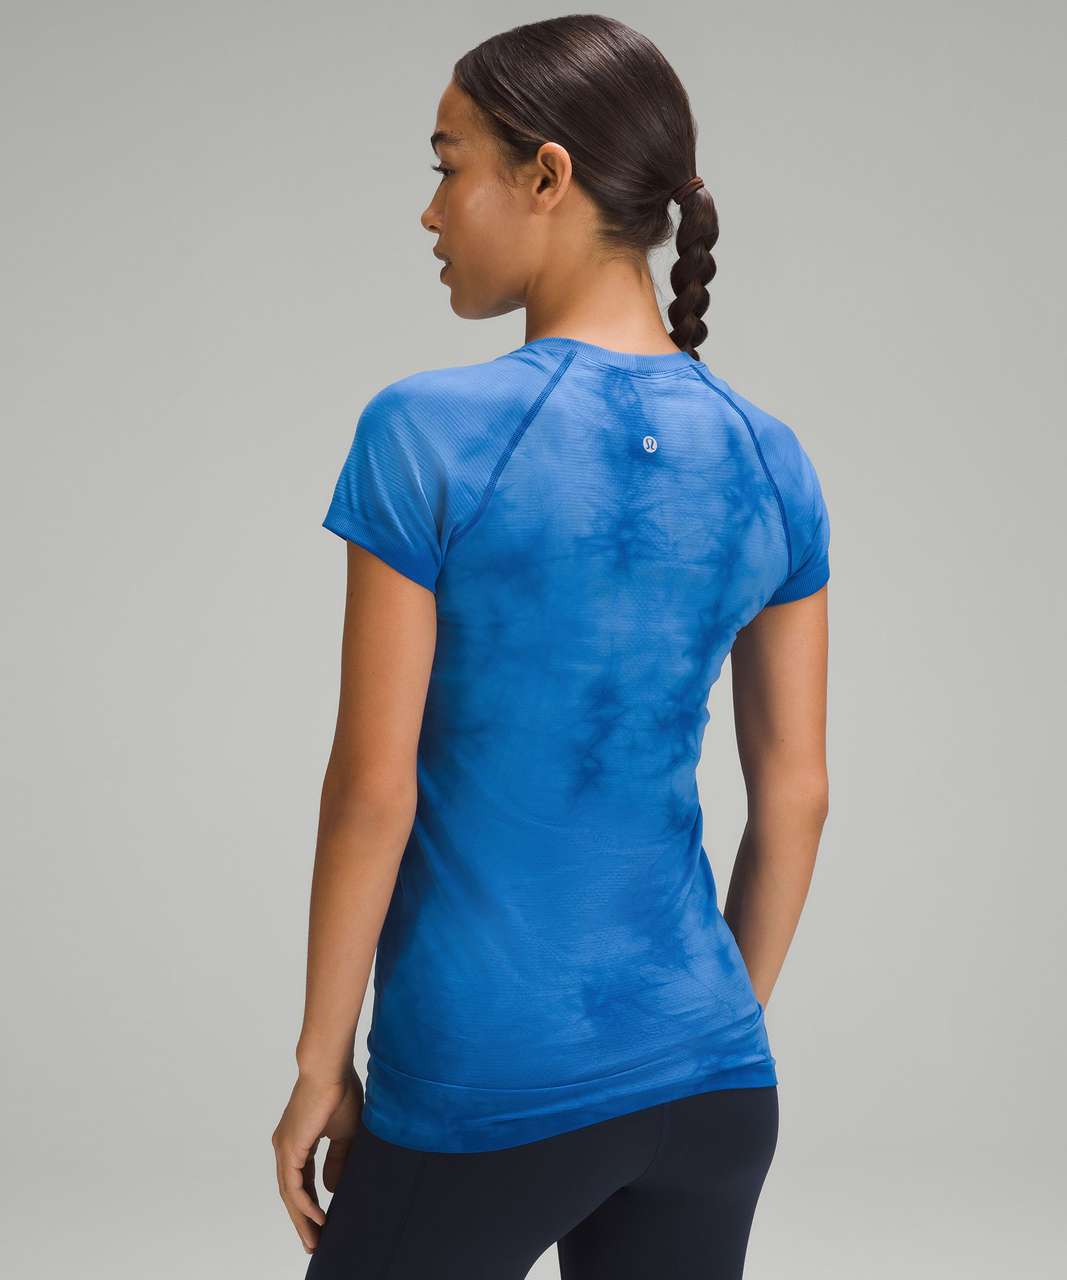 Lululemon Swiftly Tech Short-Sleeve Shirt 2.0 - Marble Dye Pipe Dream Blue / Symphony Blue